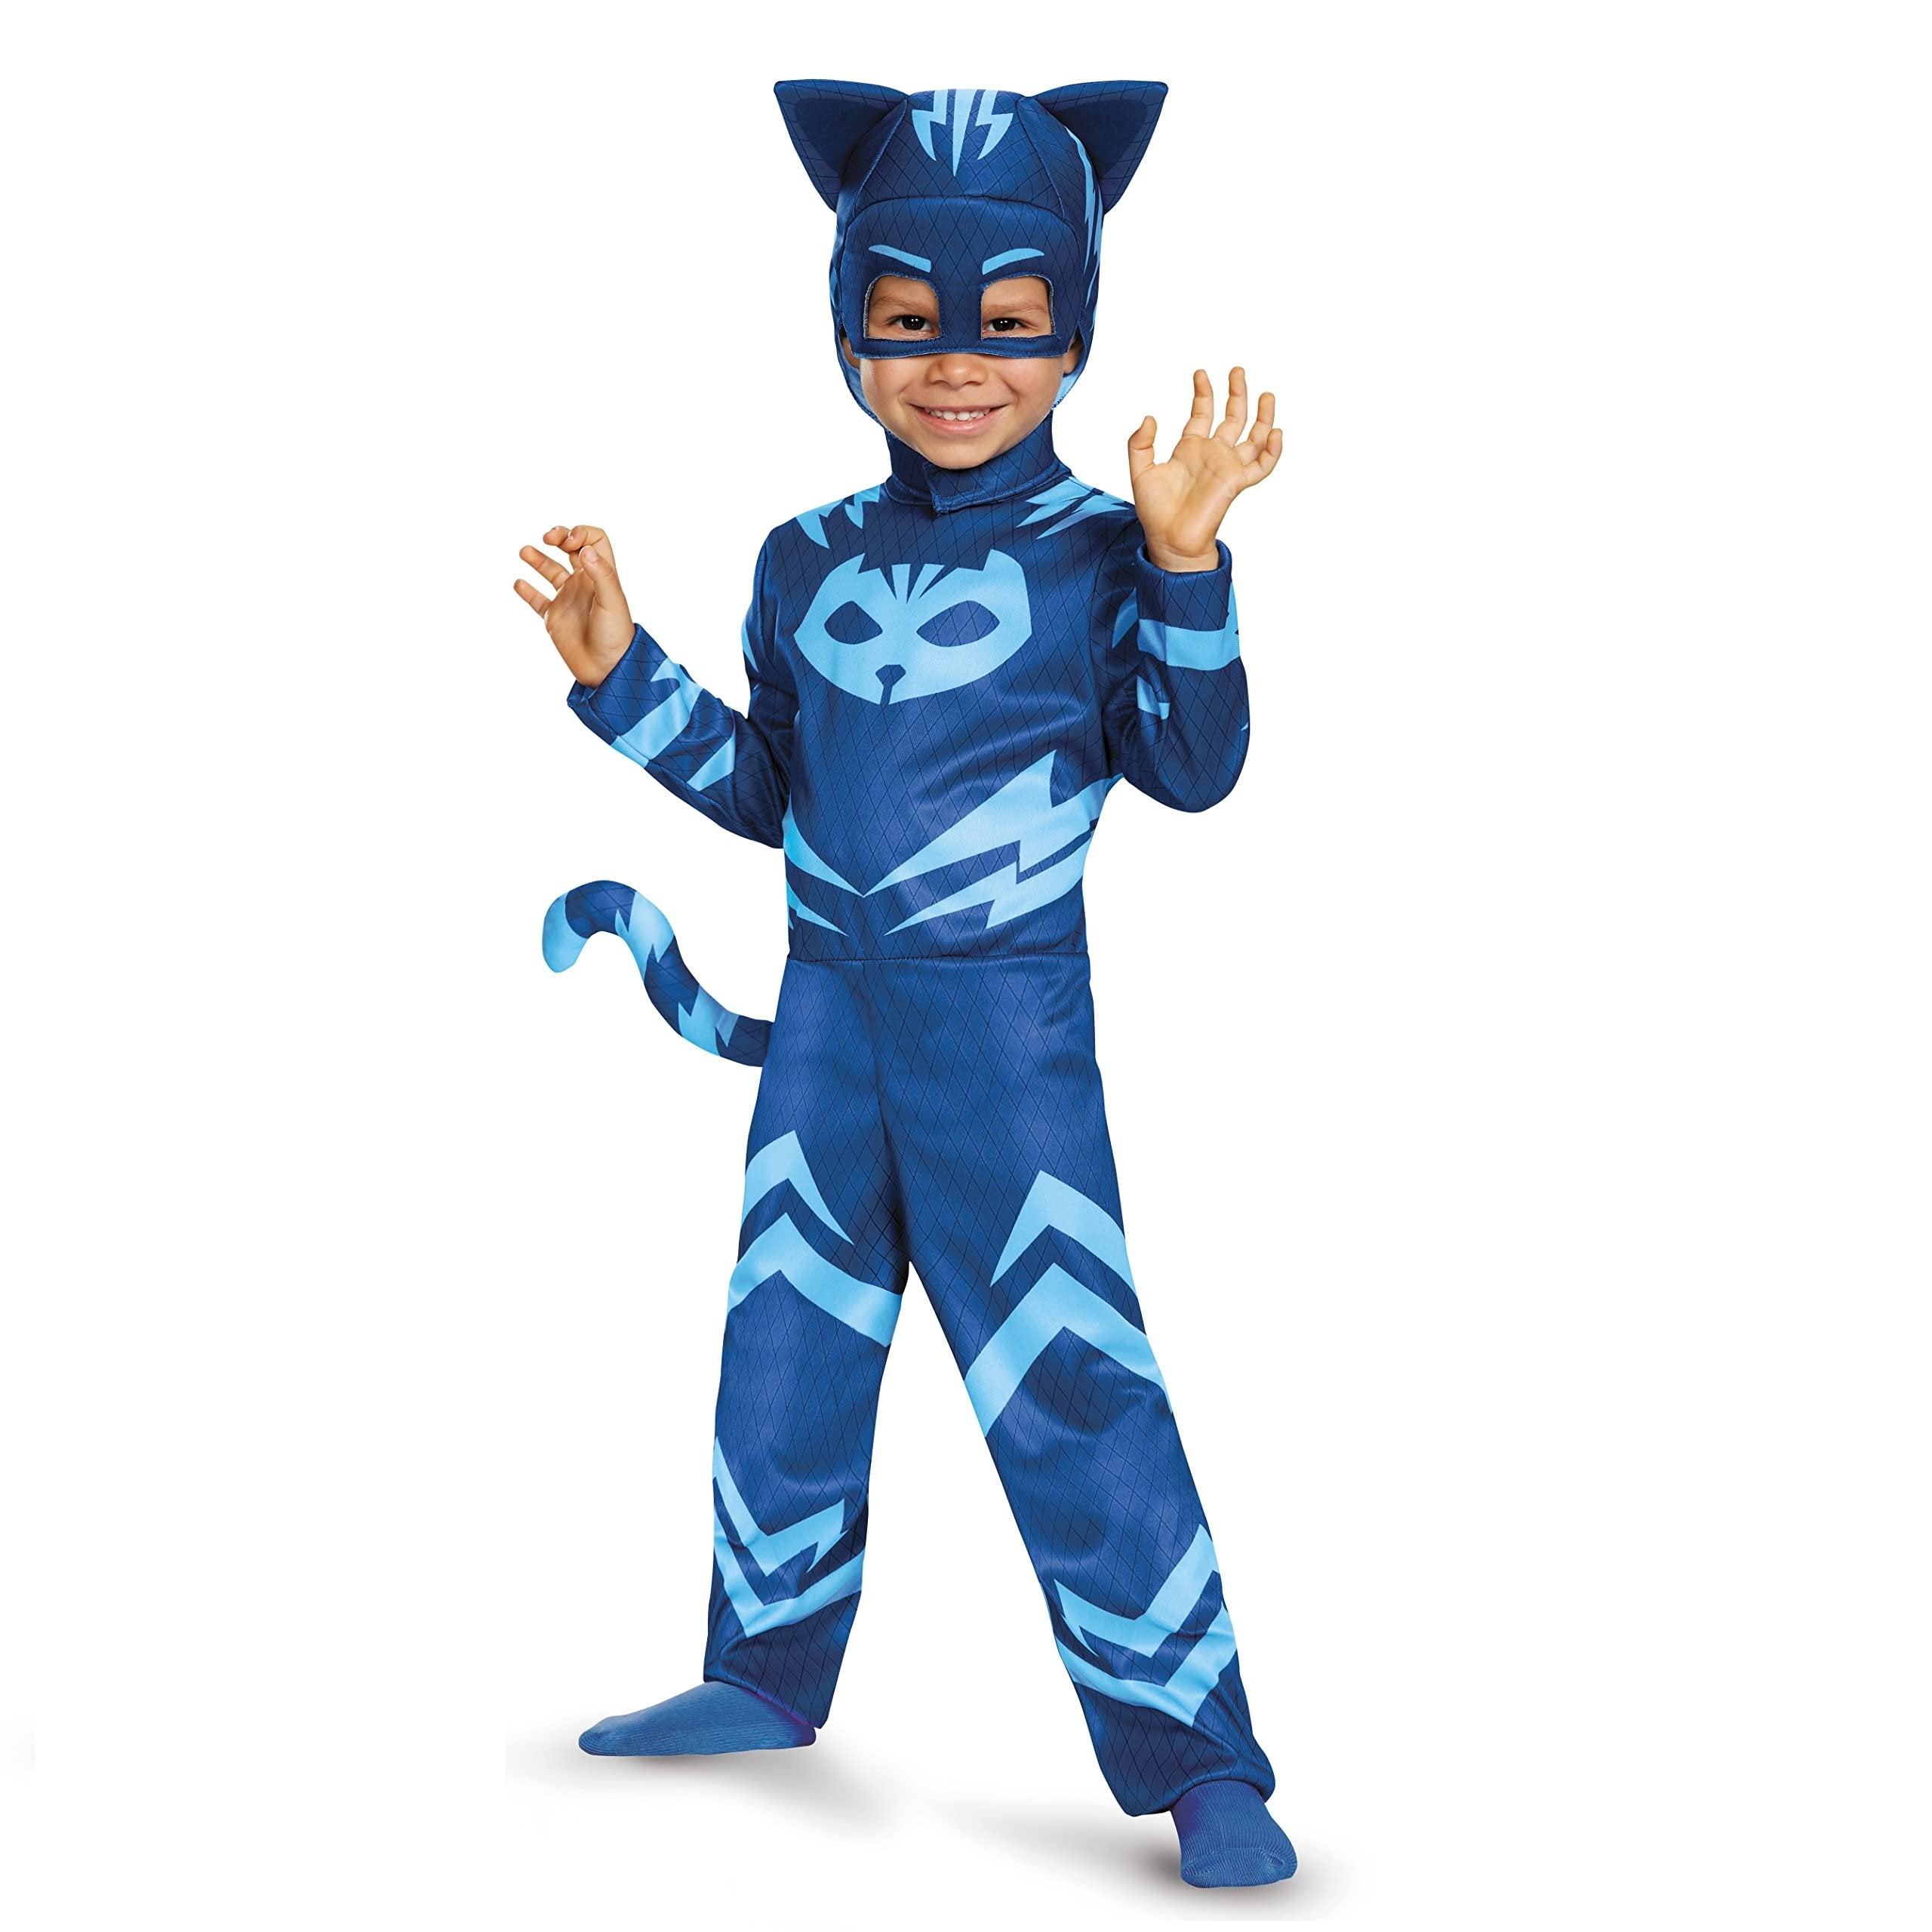 Disguise Catboy Costume - Toddler Medium (3T-4T) Blue PJ Masks - Free Shipping & Returns